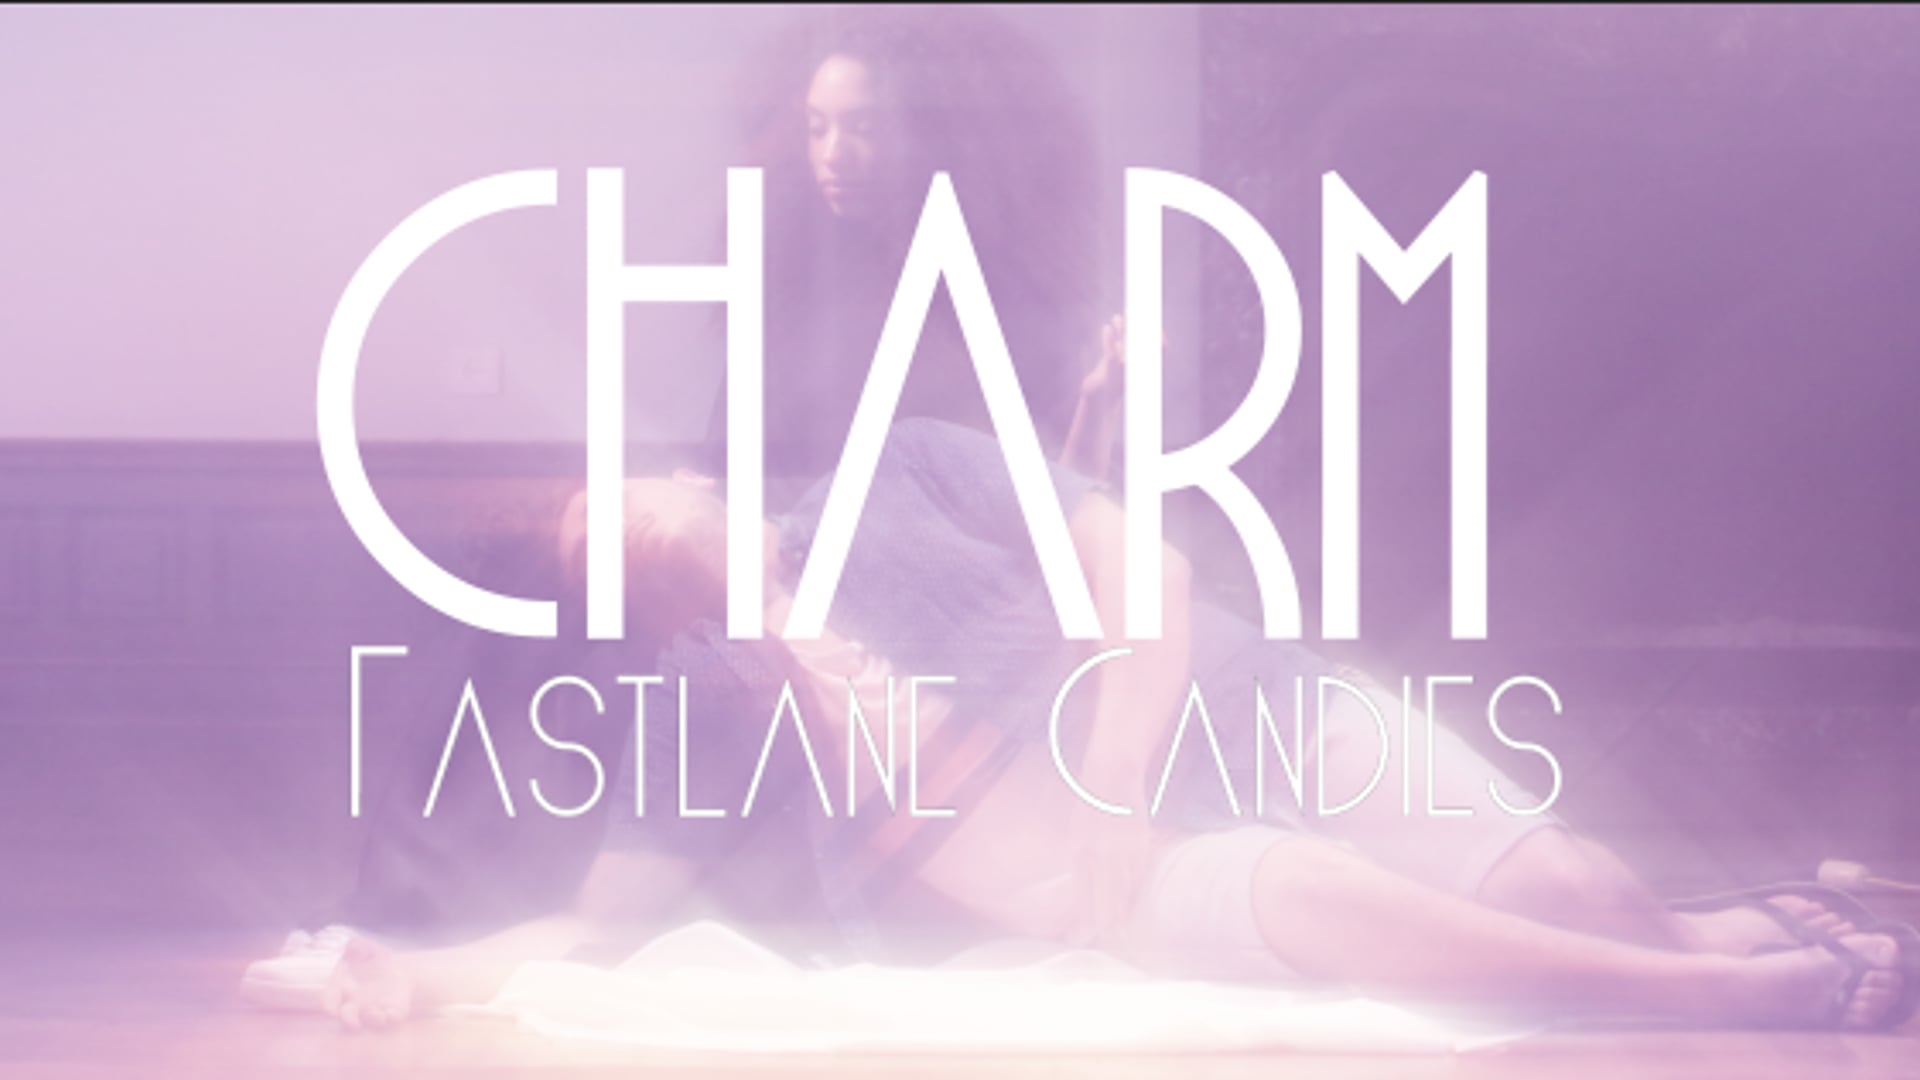 FASTLANE CANDIES - CHARM